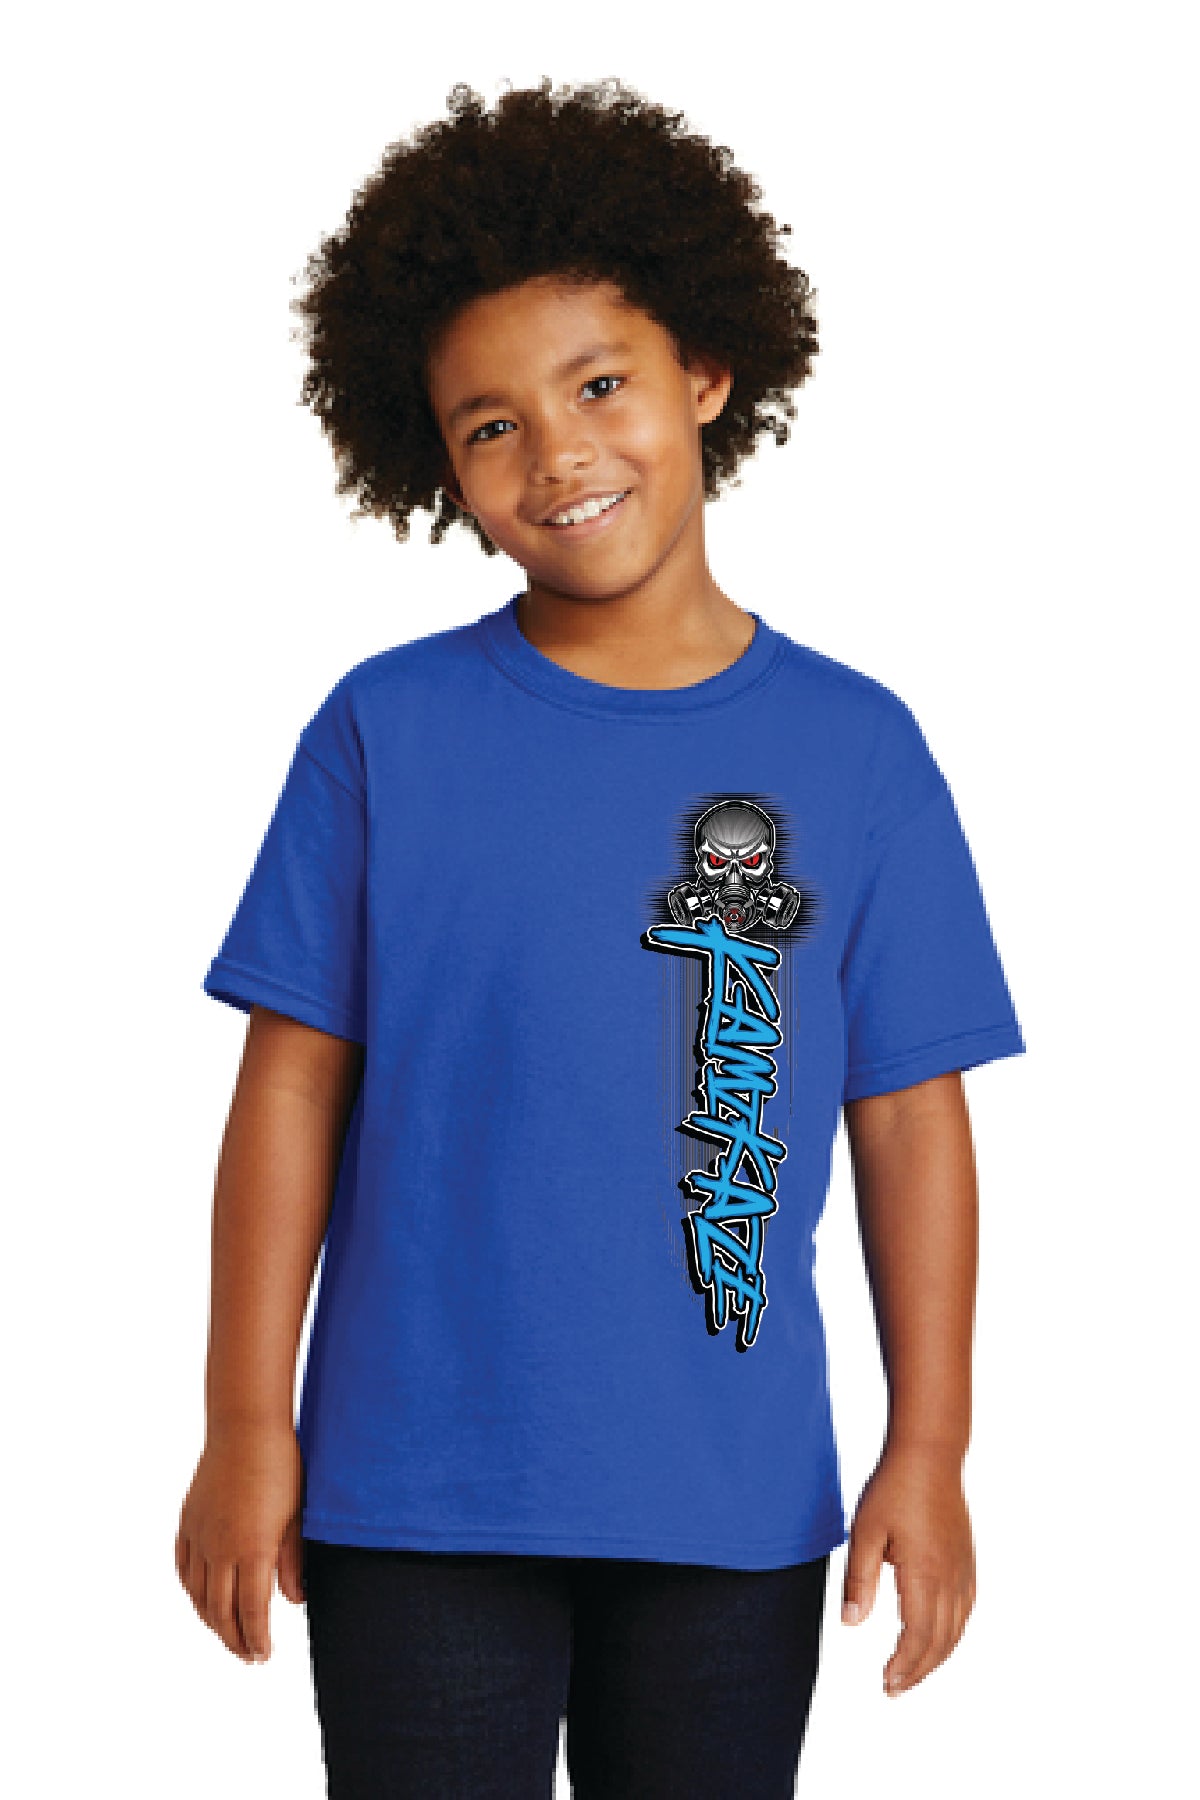 Kid's Kamikaze Royal Blue Shirt Front